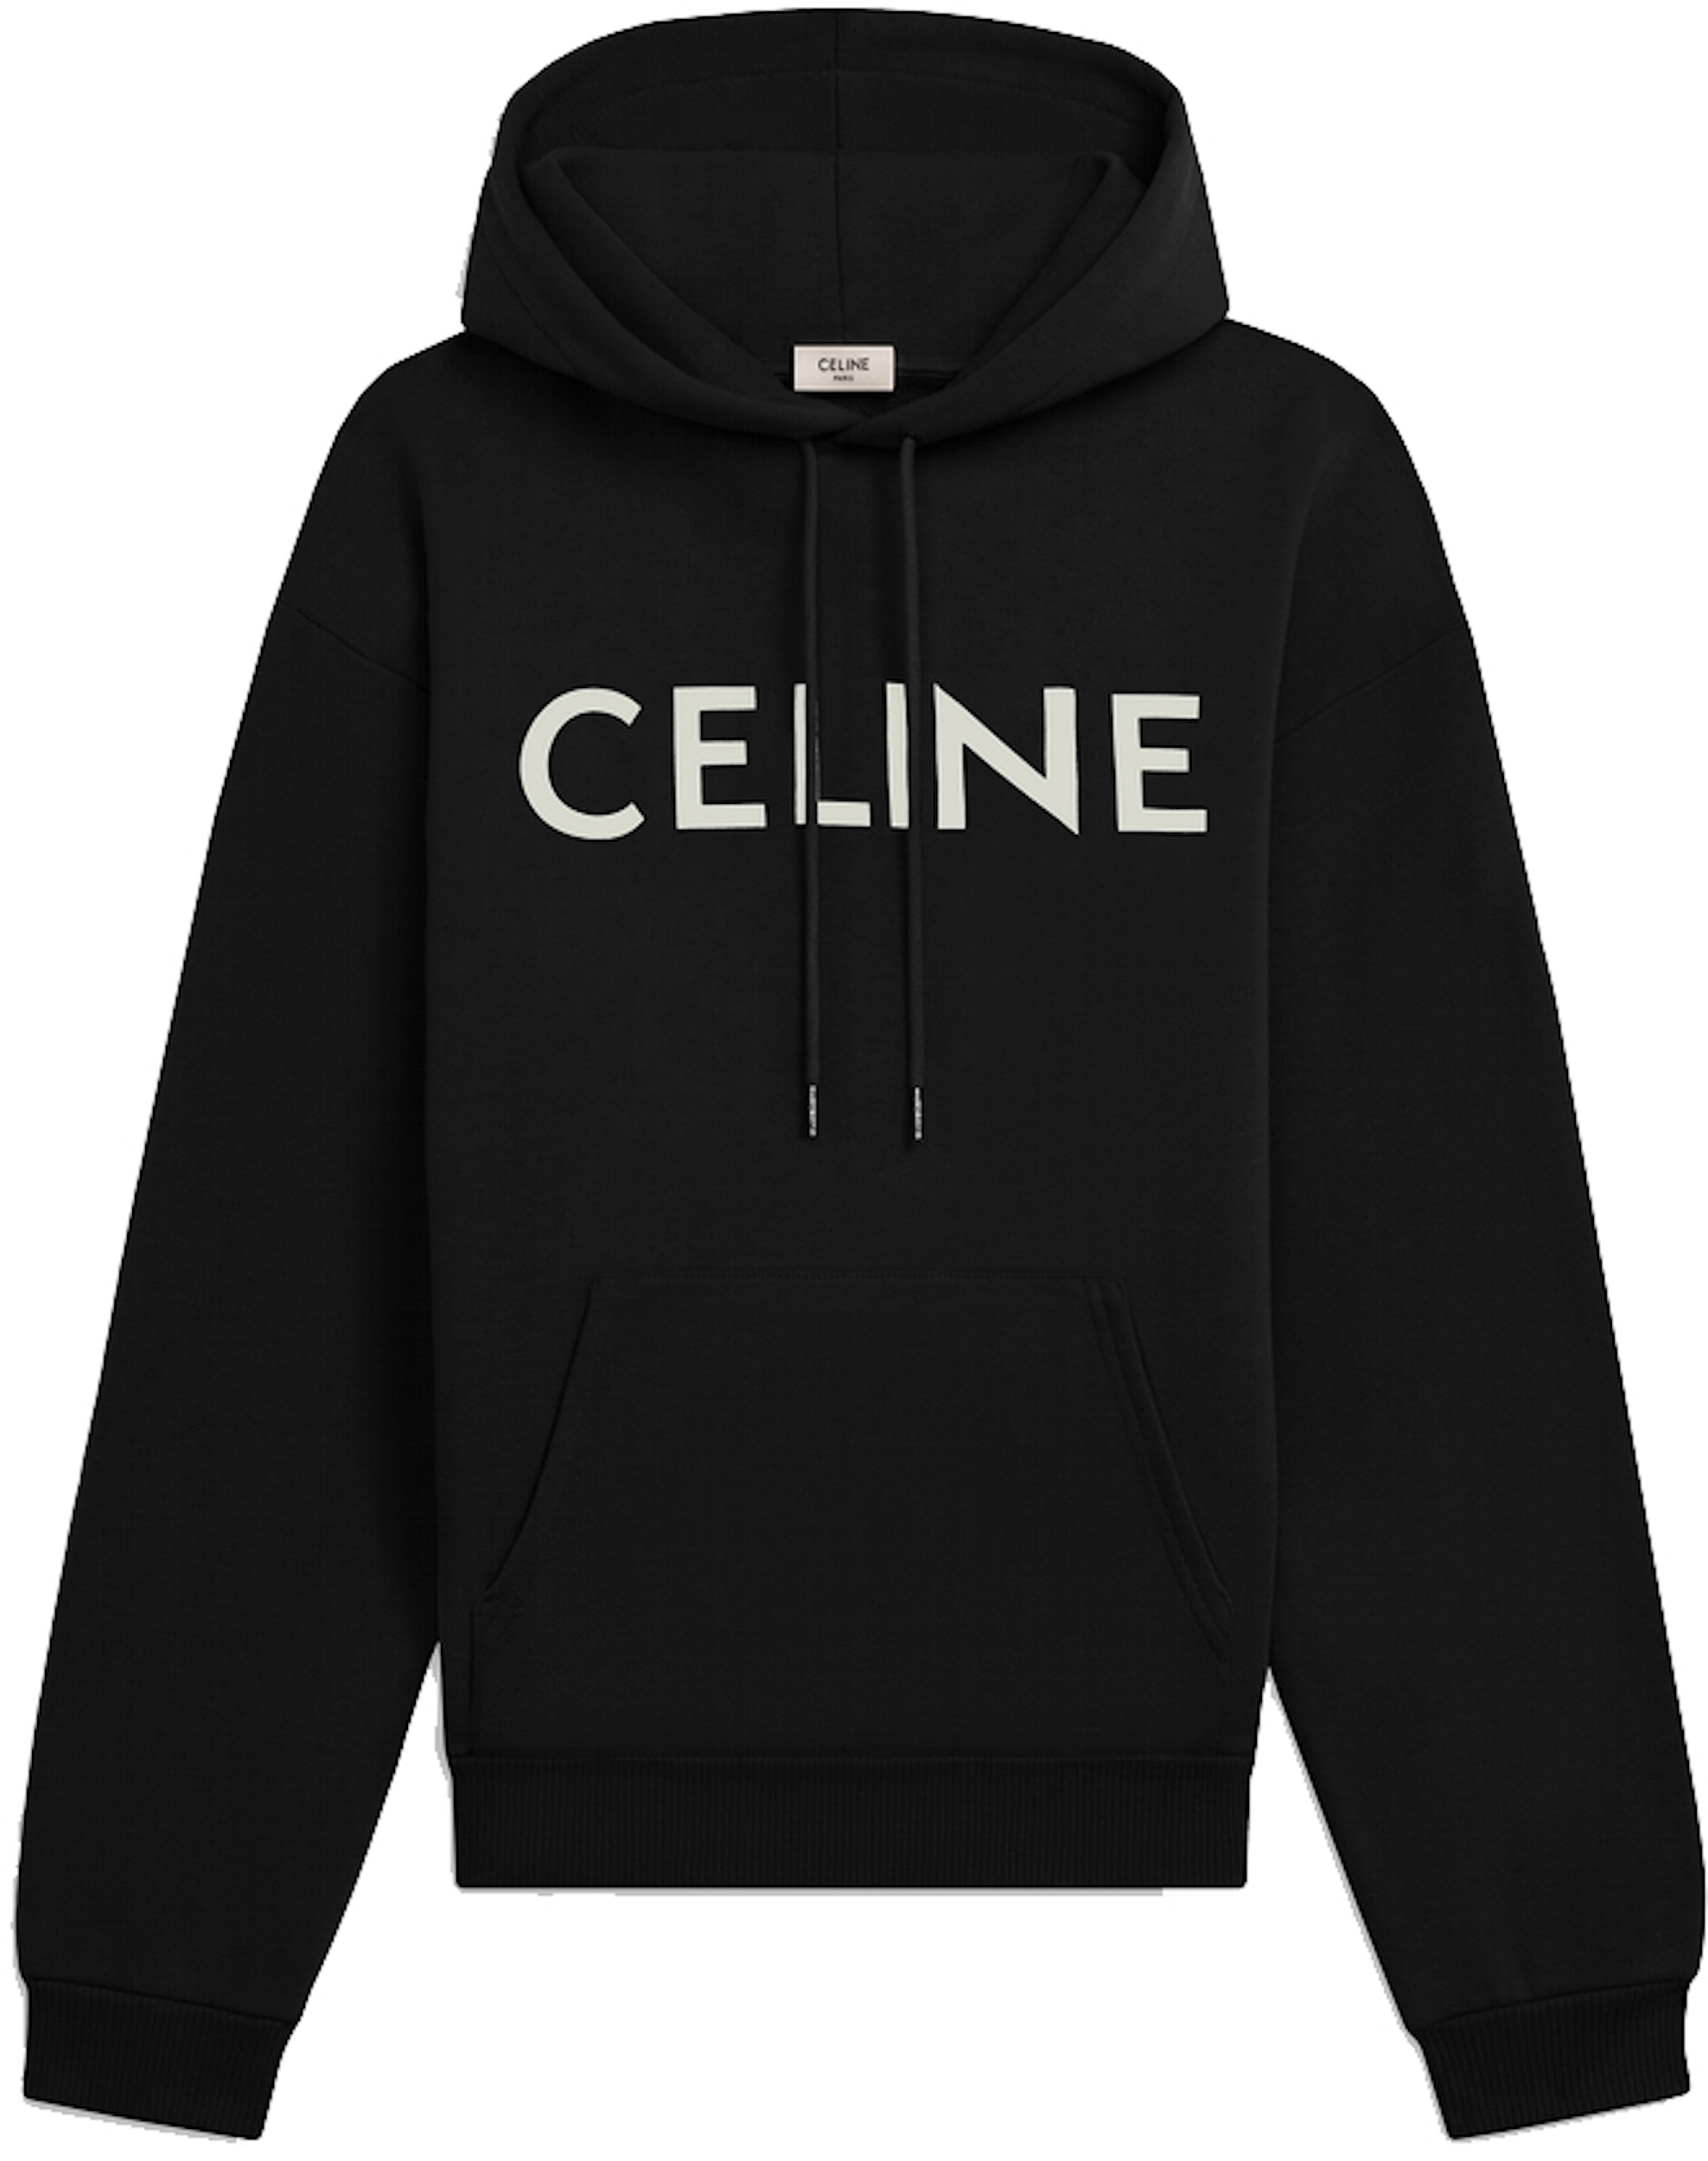 Celine Loose Cotton Sweatshirt Black/White